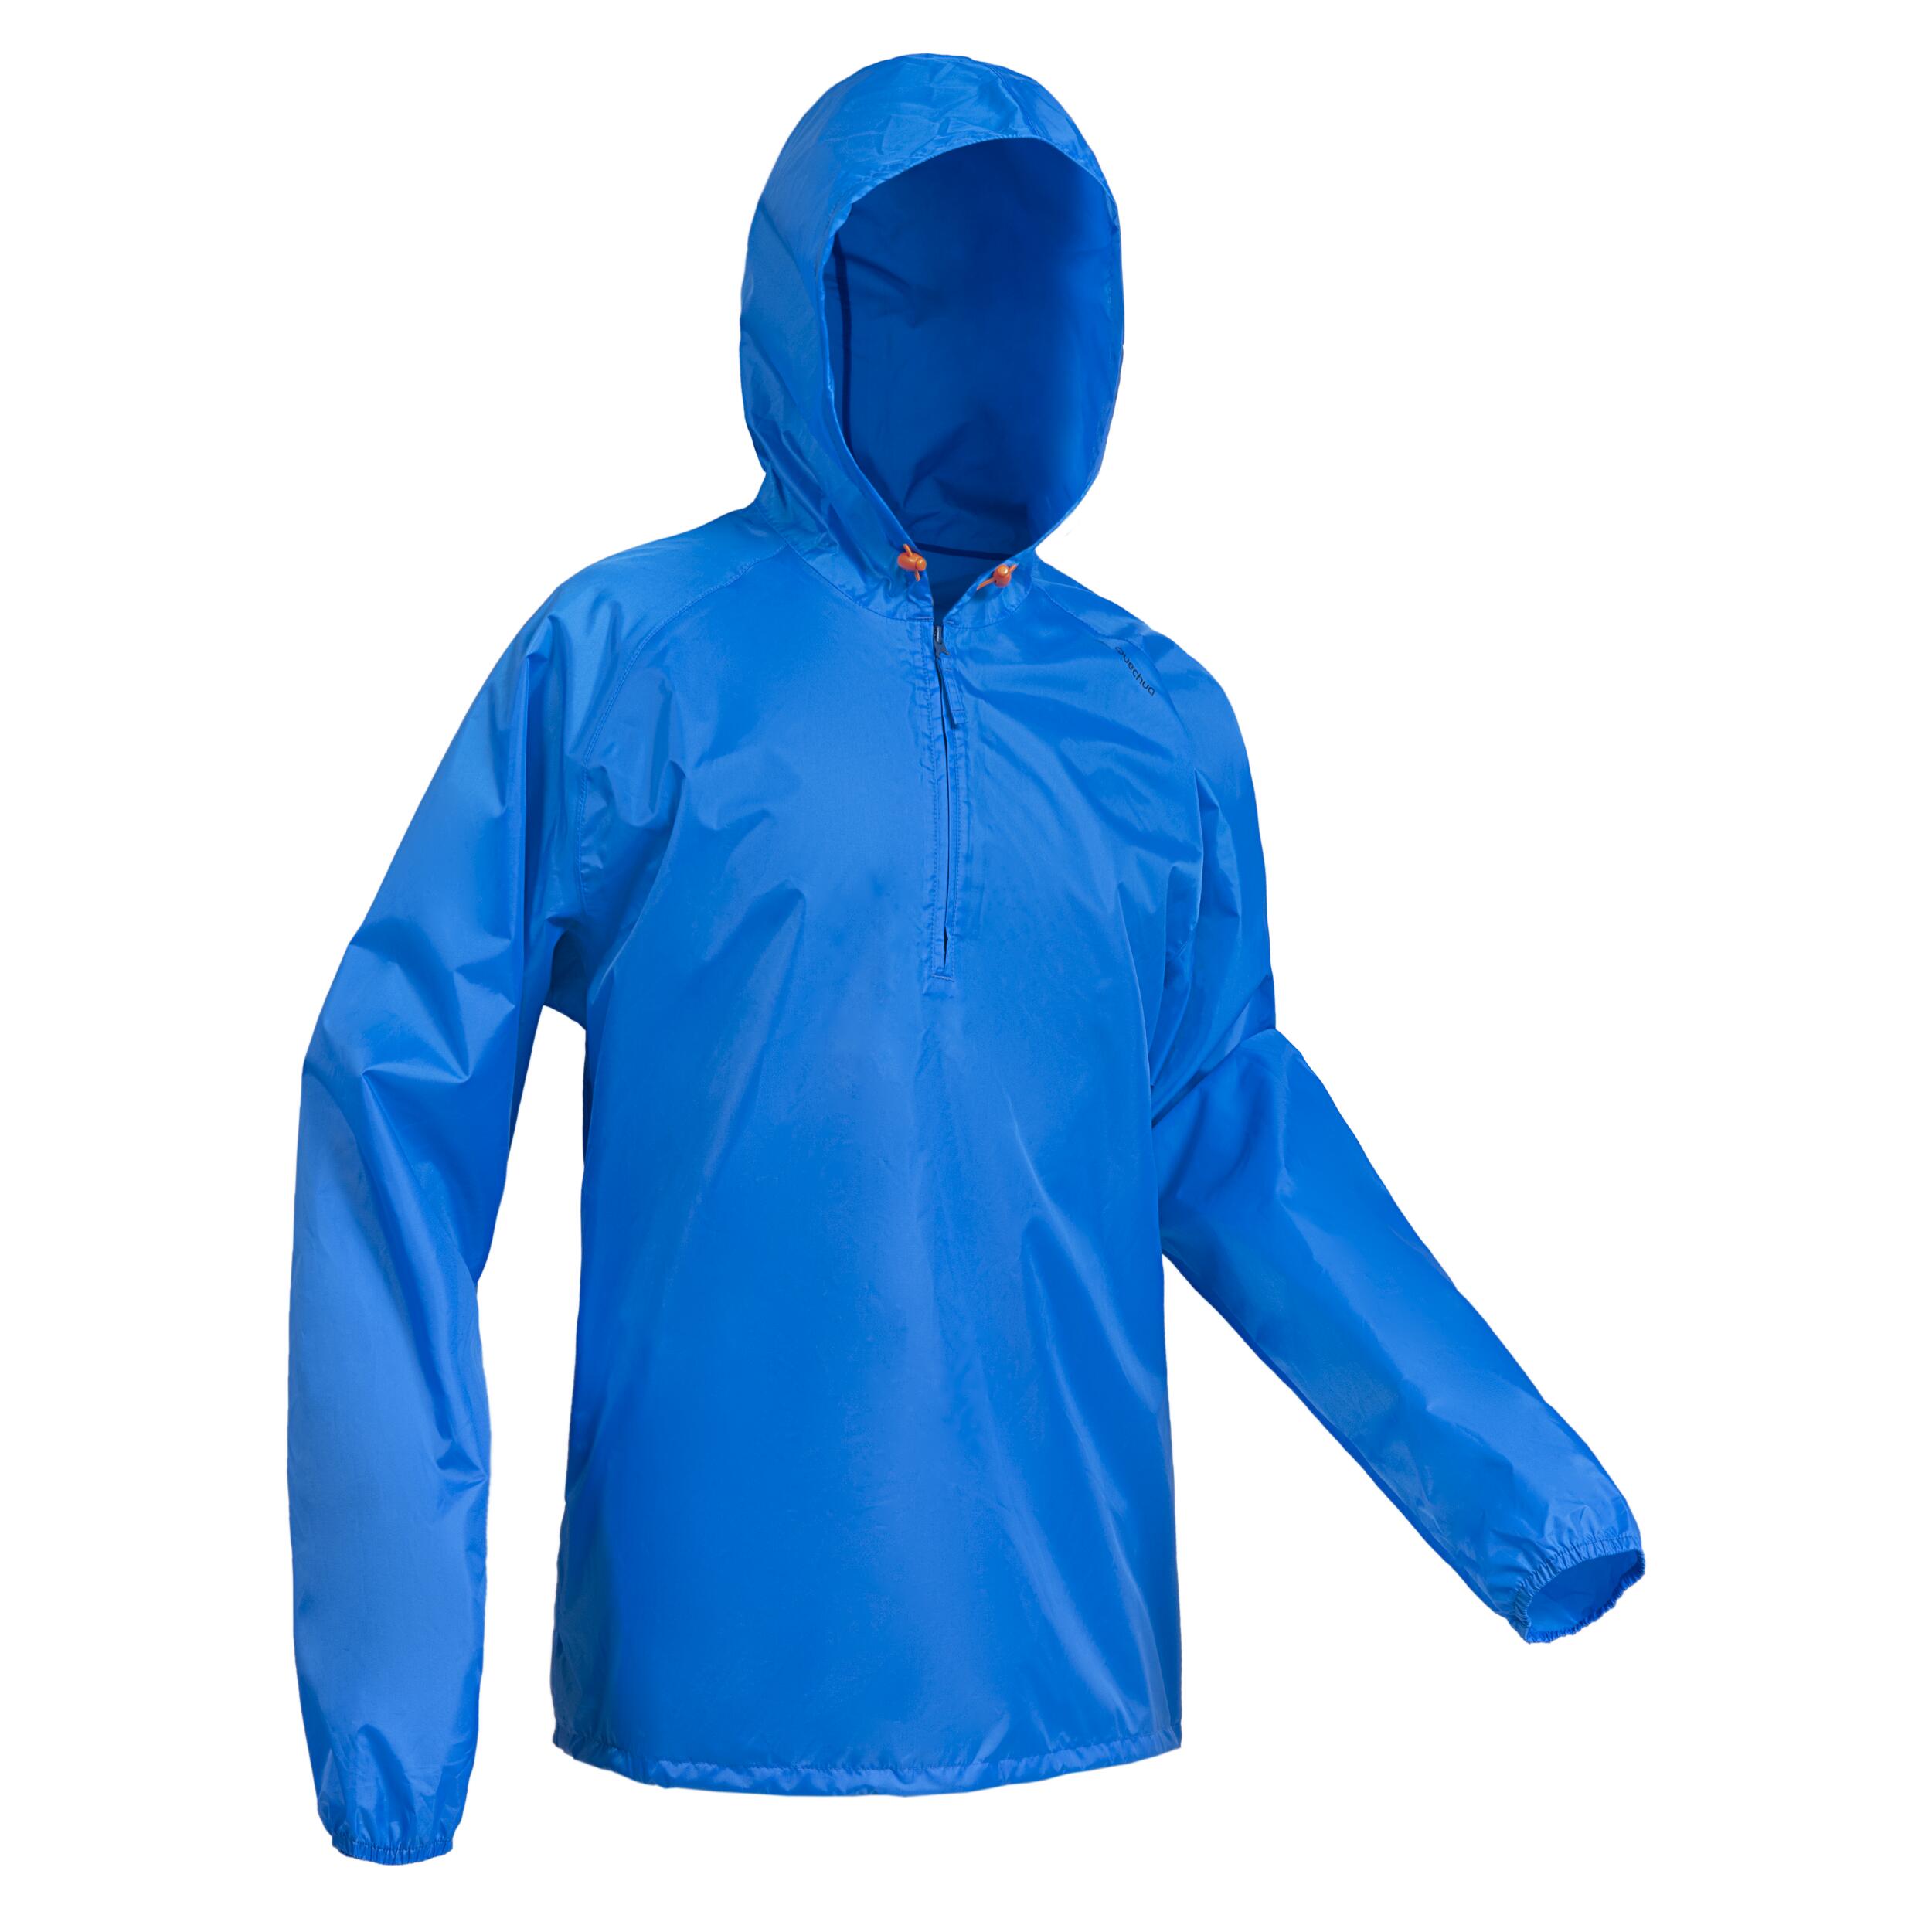 Decathlon Blue Kids Raincoats Styles, Prices - Trendyol